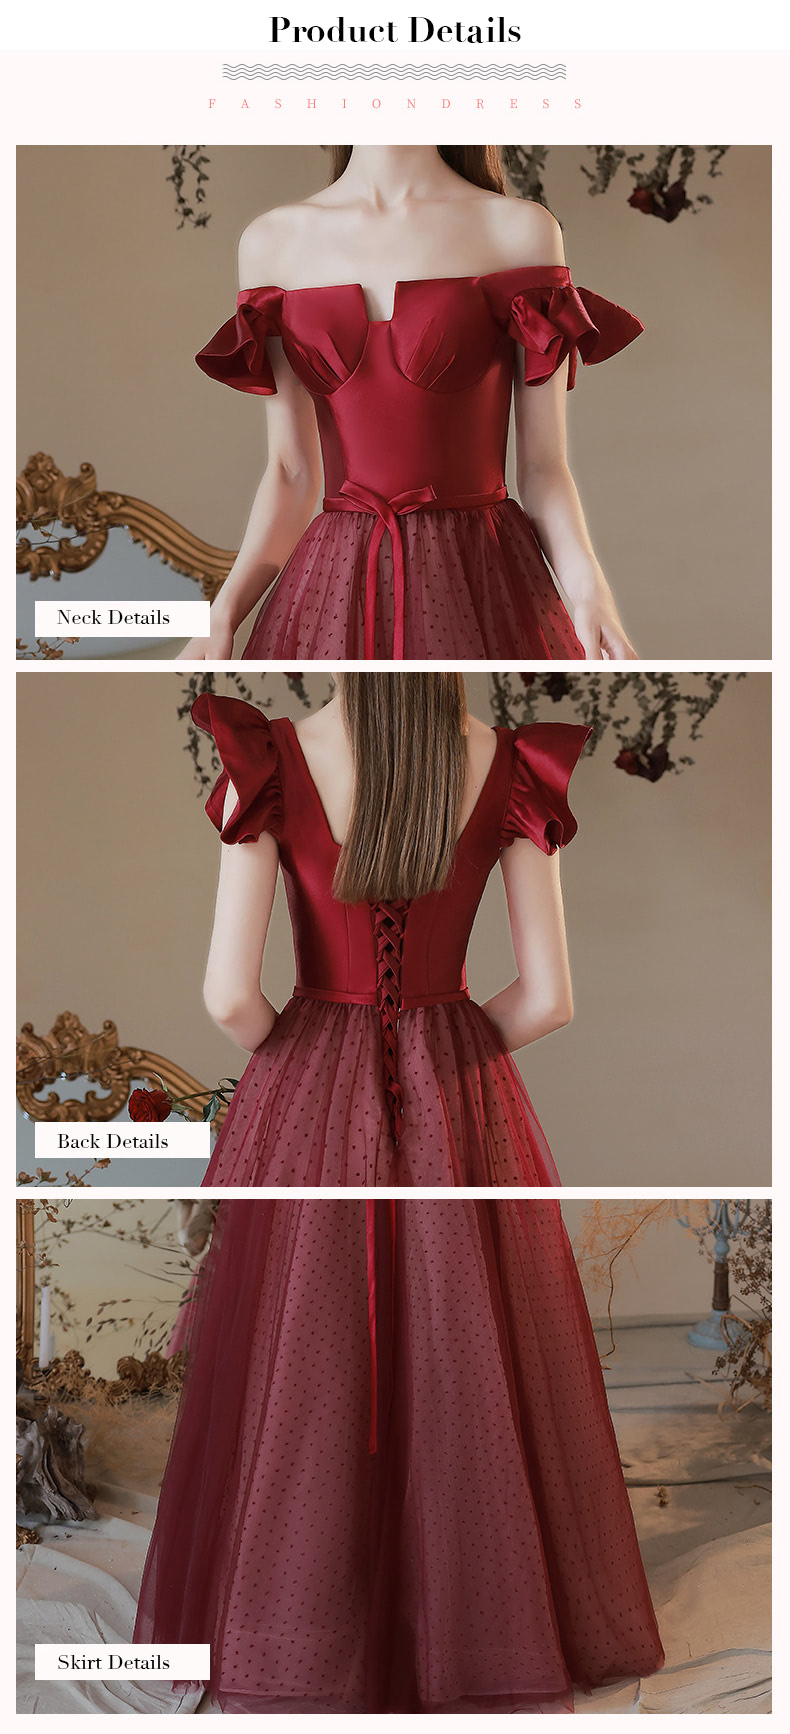 Sleeveless-Red-Satin-Prom-Dress-Long-Evening-Formal-Wear-Ballgown14.jpg